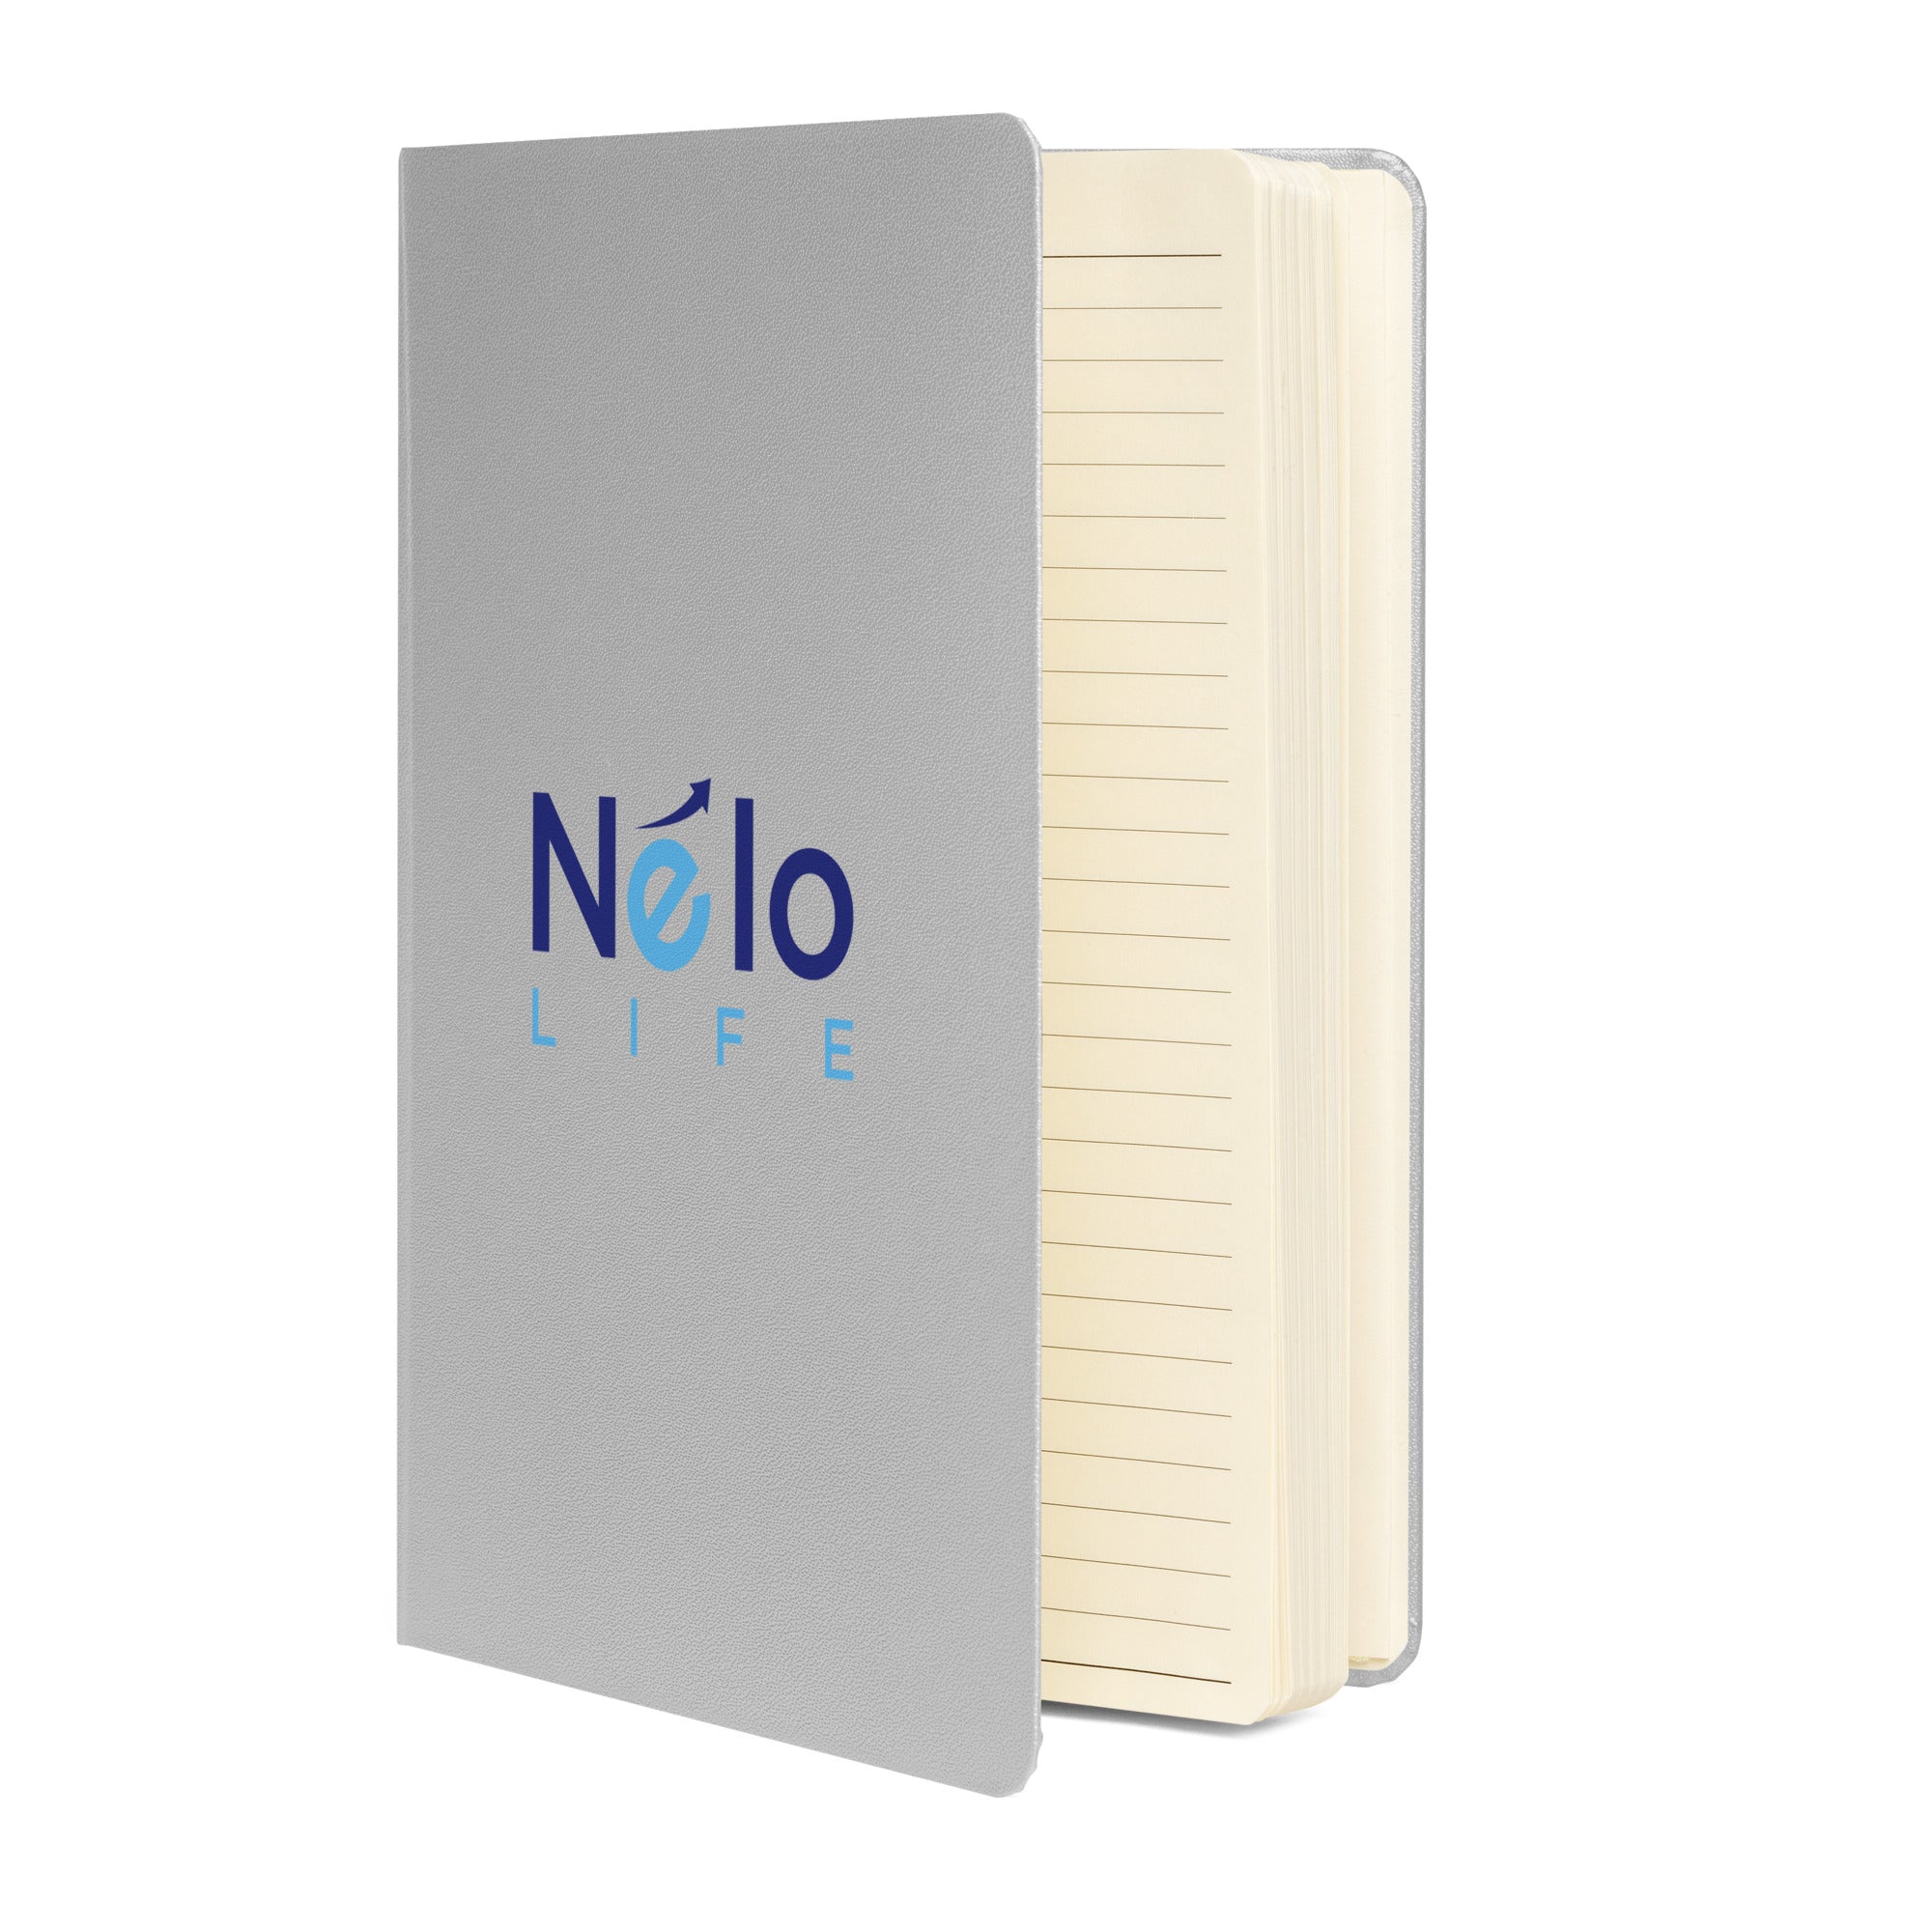 NELO LIFE hardcover bound notebook